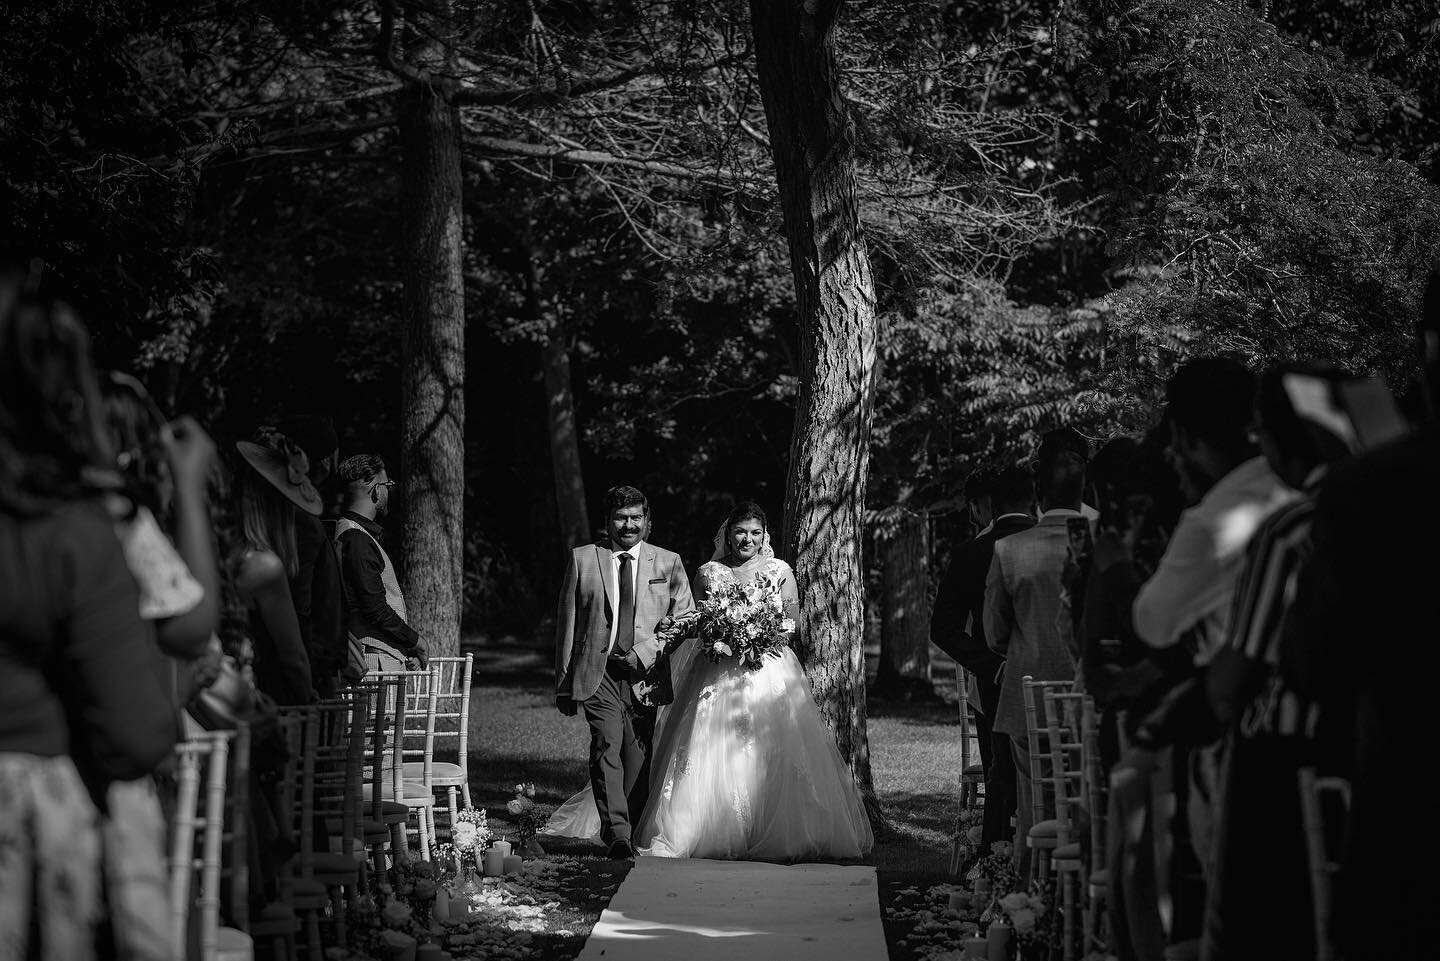 As She Walks Down&hellip;

Noir by Kabilan Raviraj

#essexwedding #civilwedding #whitedress #whitedresswedding #civil #wedding #outdoorwedding #pronovias